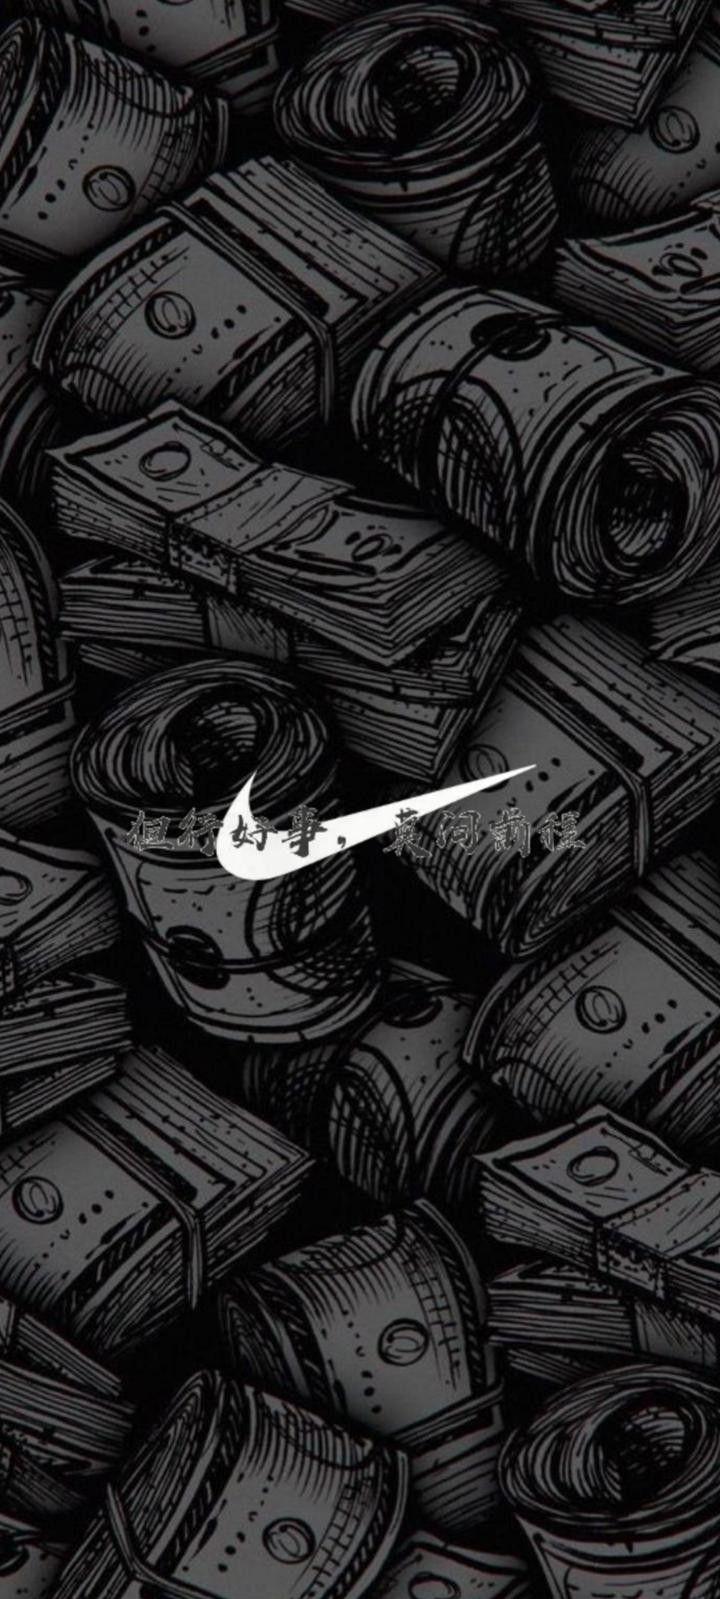 Nikes Wallpaper Ideas In Nike Logo